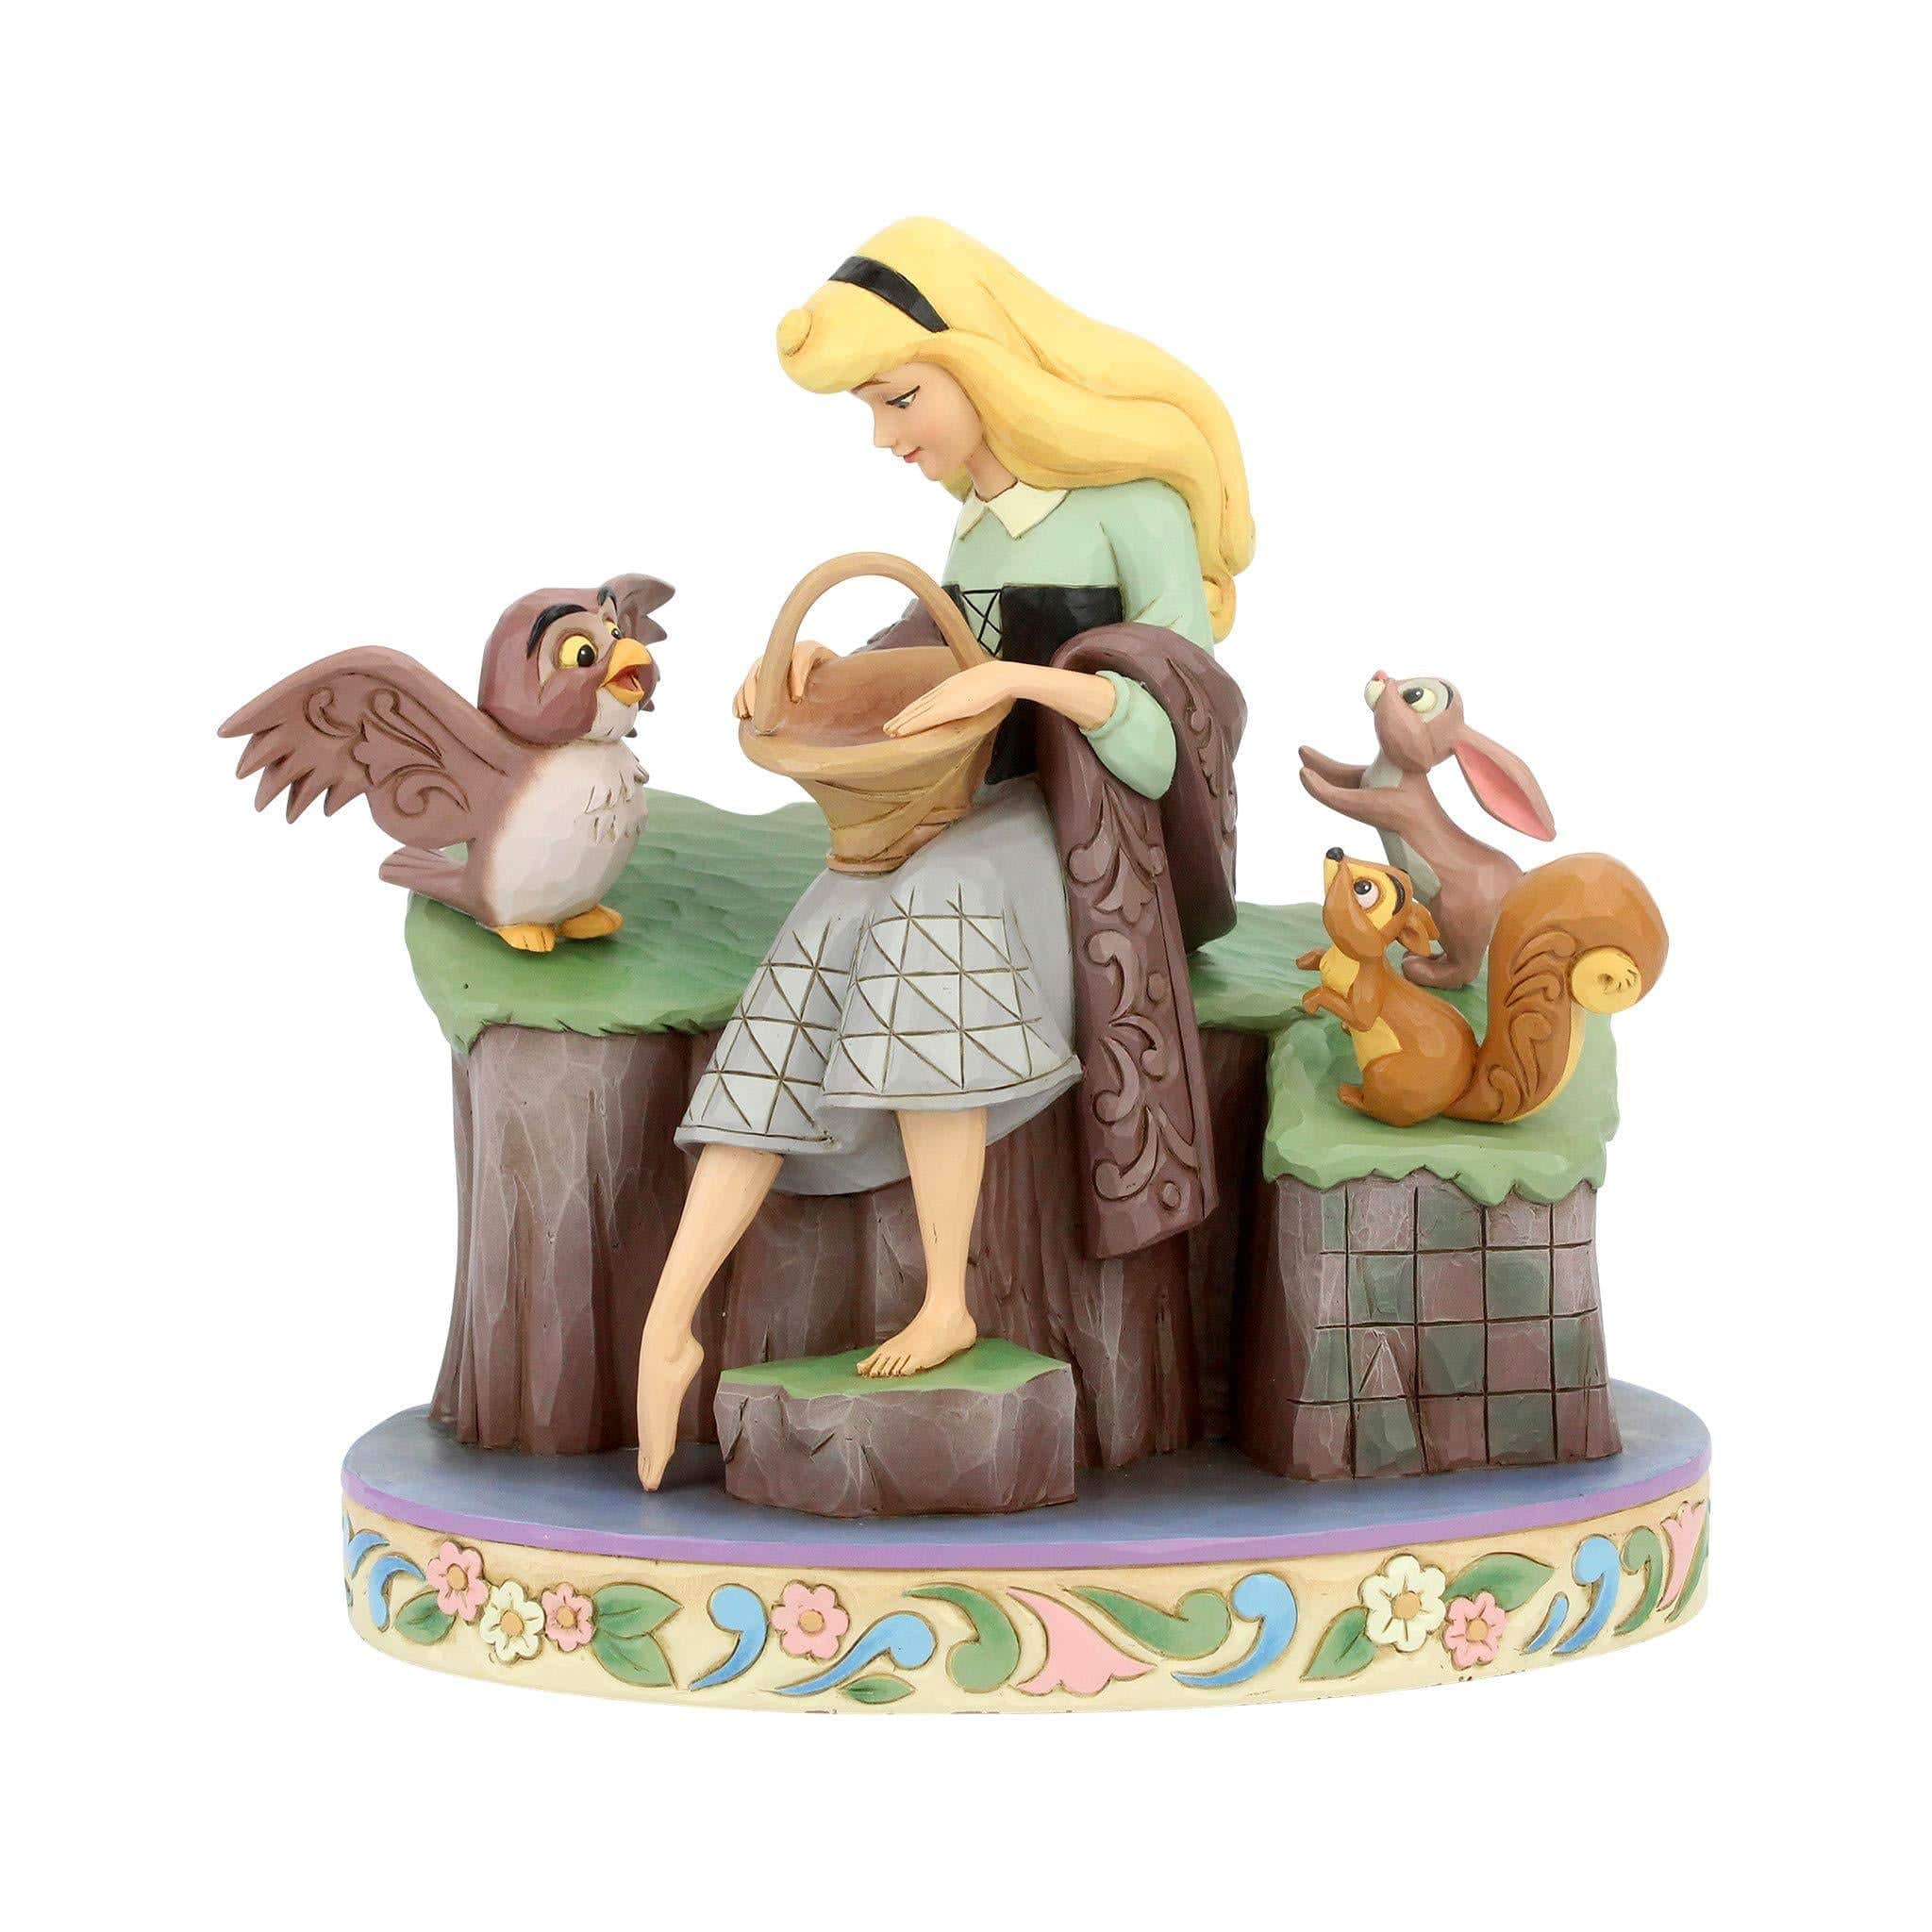 Enesco Disney Ornament Disney Traditions Figurine - Beauty Rare (Sleeping Beauty 60th Anniversary Piece)